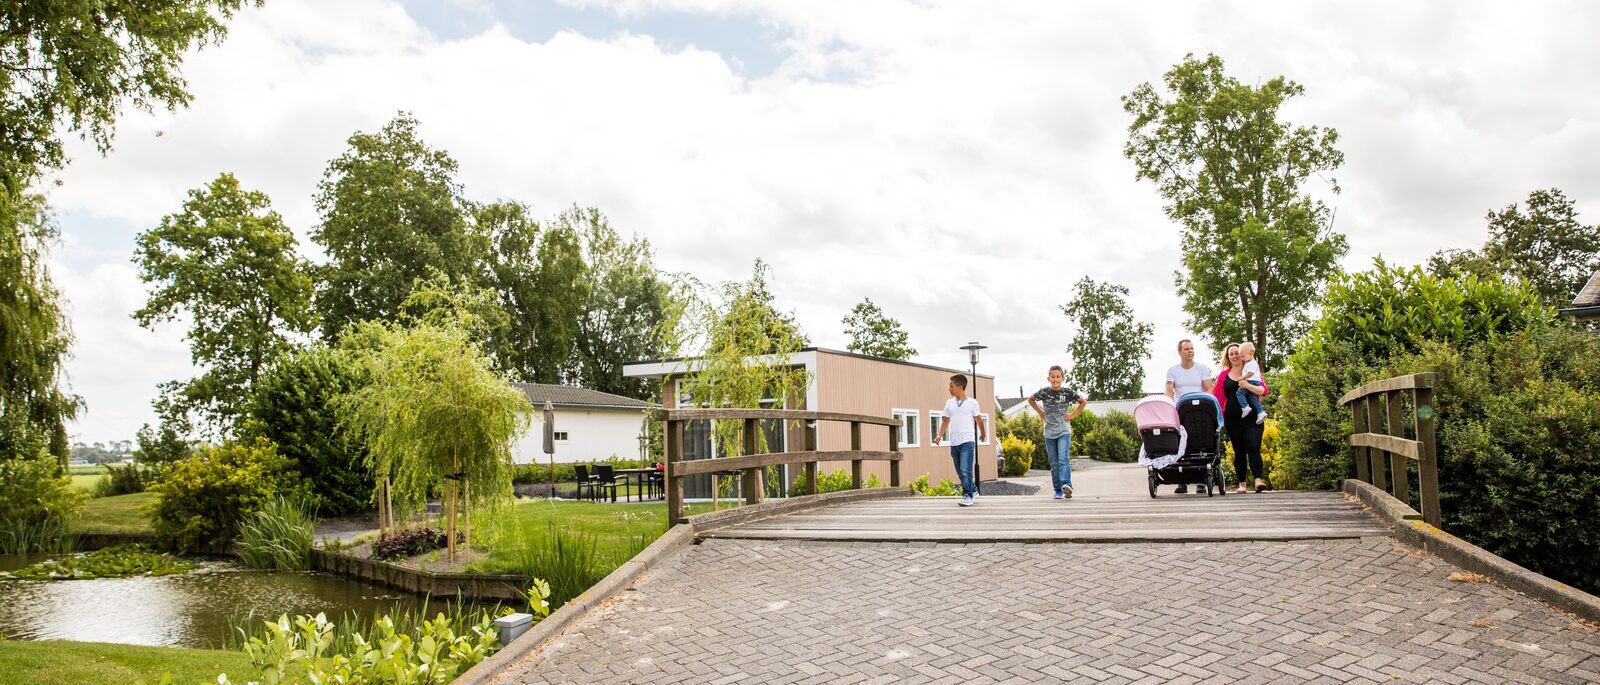 Park Westerkogge | Vacation park in Berkhout